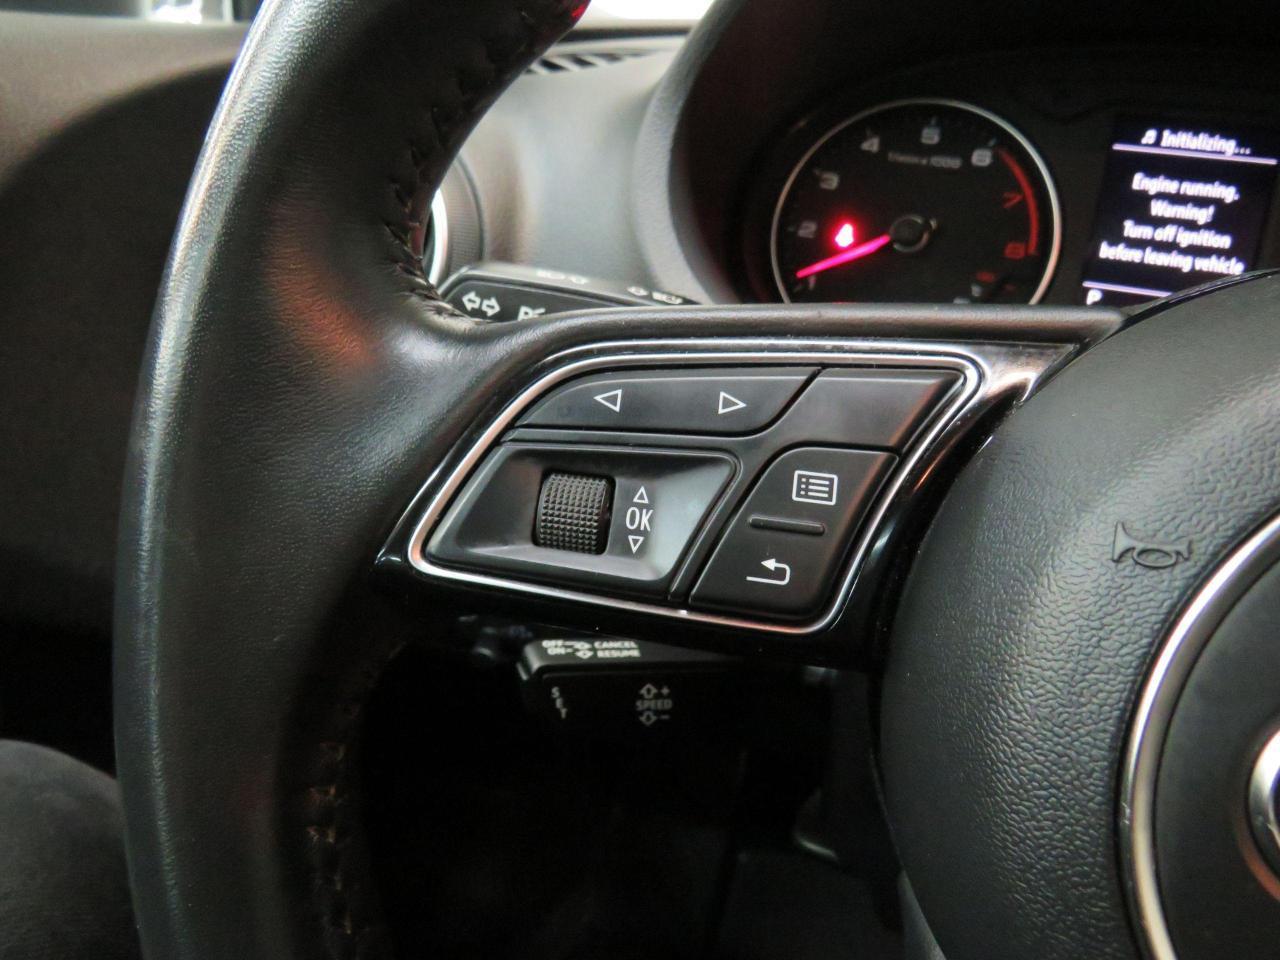 2019 Audi A3 KOMFORT | AWD | Leather | Sunroof | Backup Cam - Photo #16